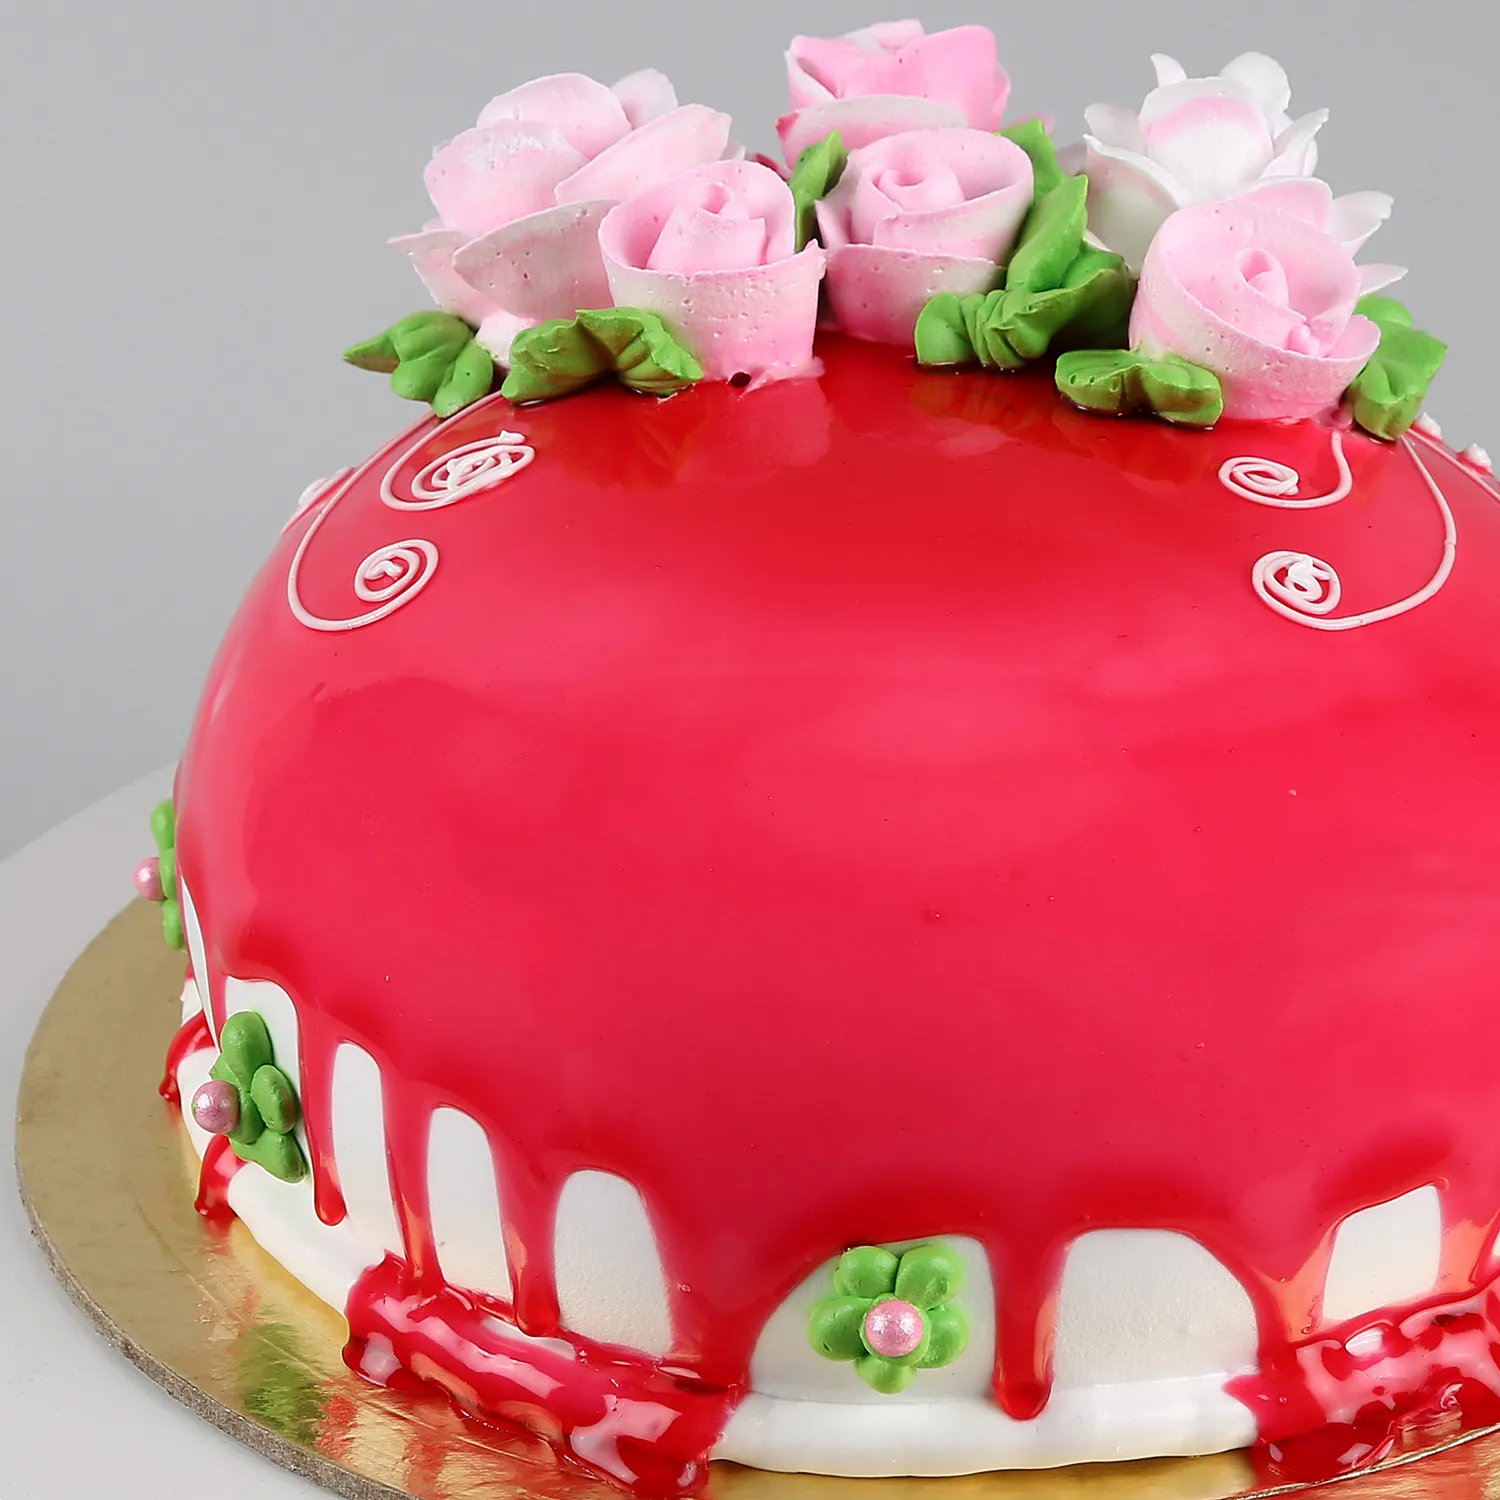 Happy Wedding Anniversary Cake - 2 KG